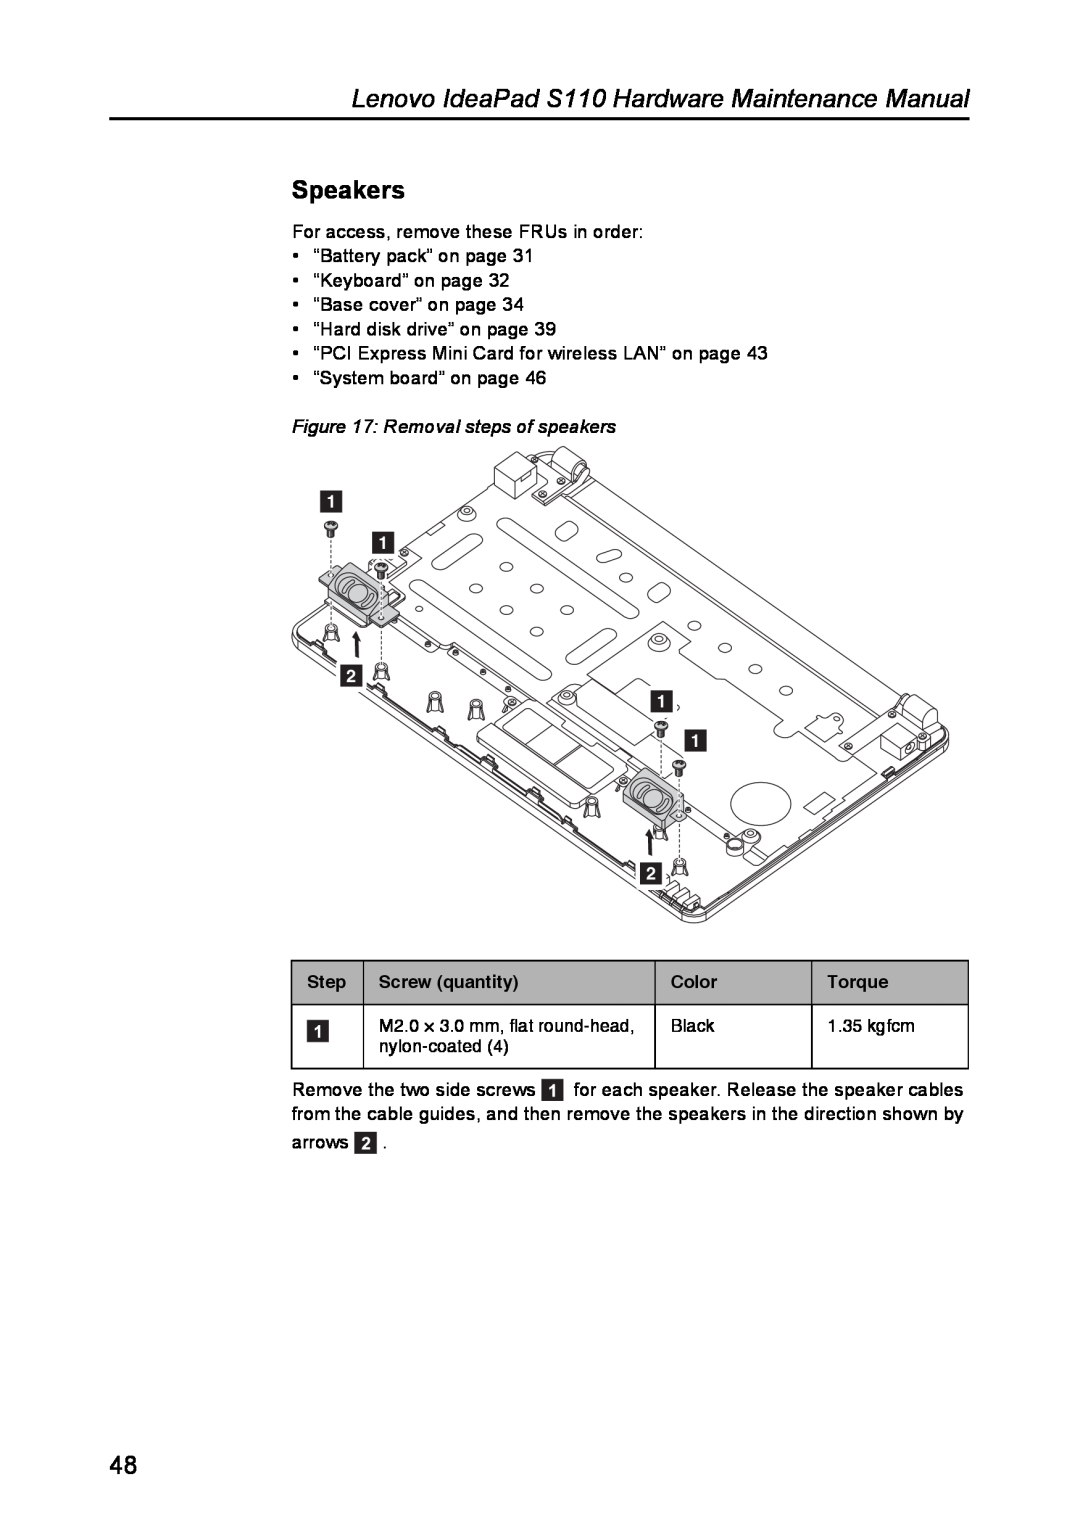 Lenovo manual Speakers, Removal steps of speakers, Lenovo IdeaPad S110 Hardware Maintenance Manual 